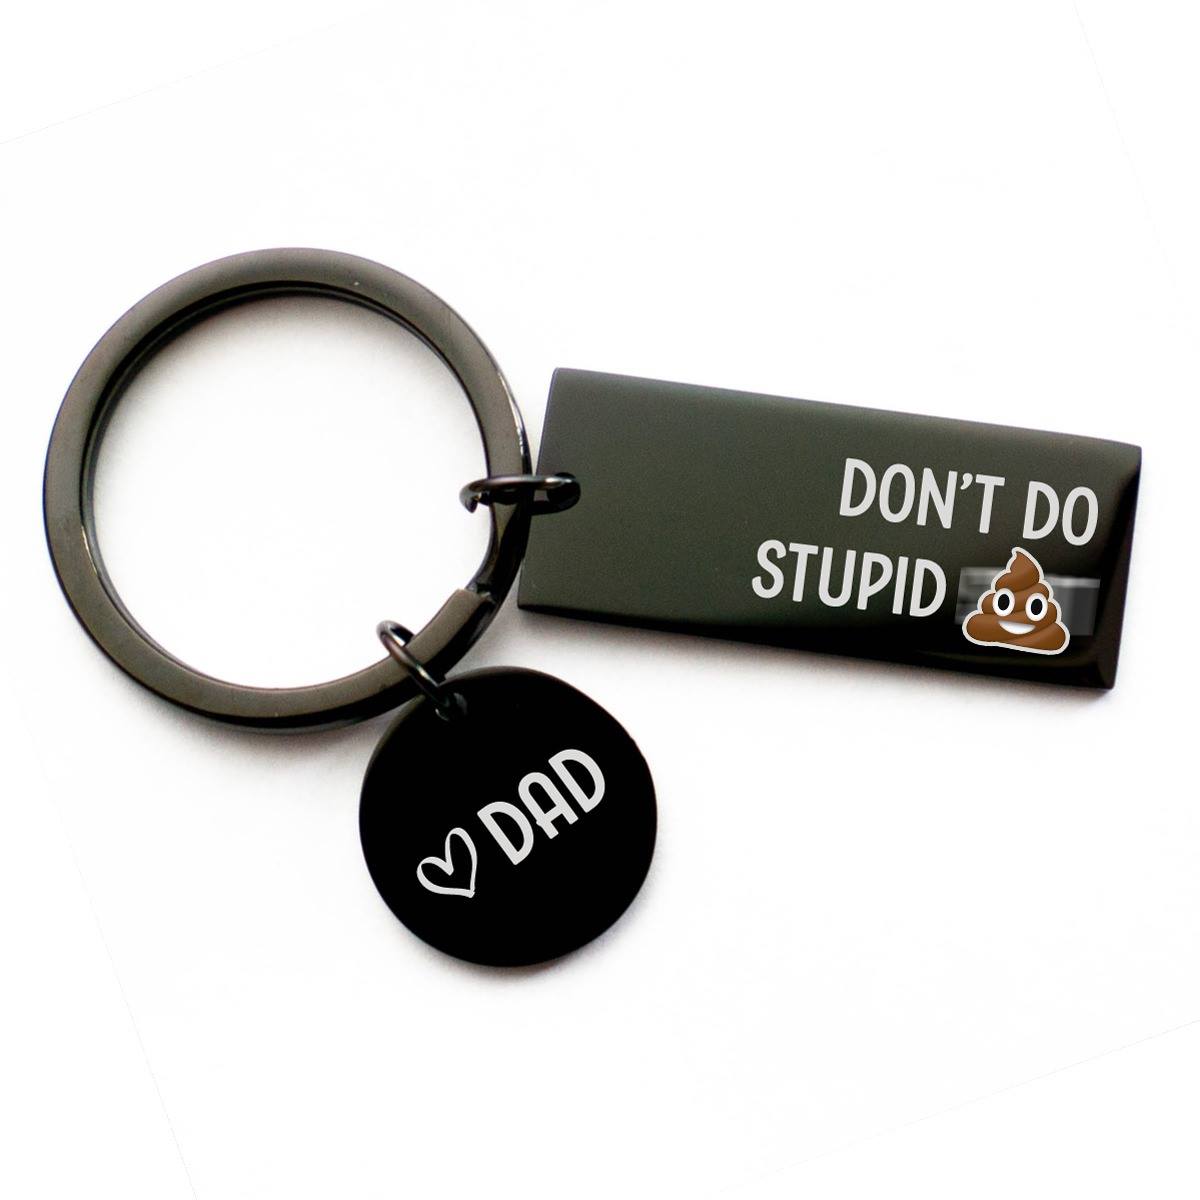 Don't Do Stupid Shit - Dad Keychain